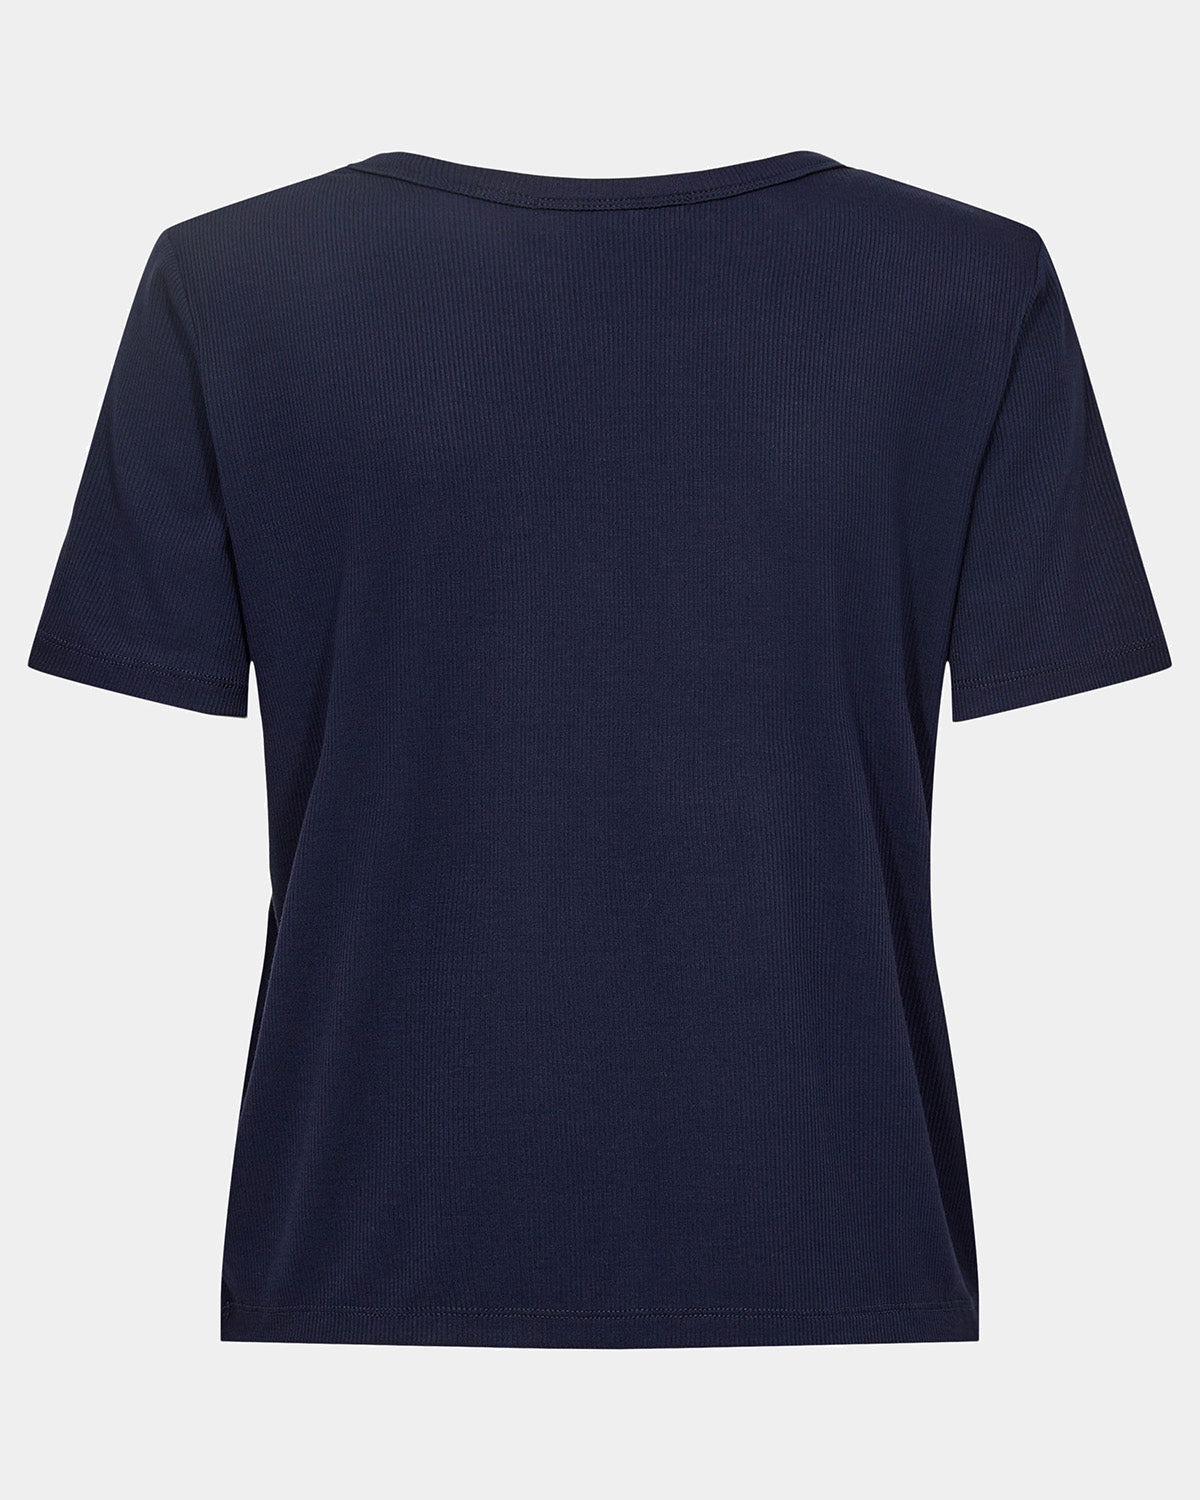 SNOS414-T-shirt-Navy